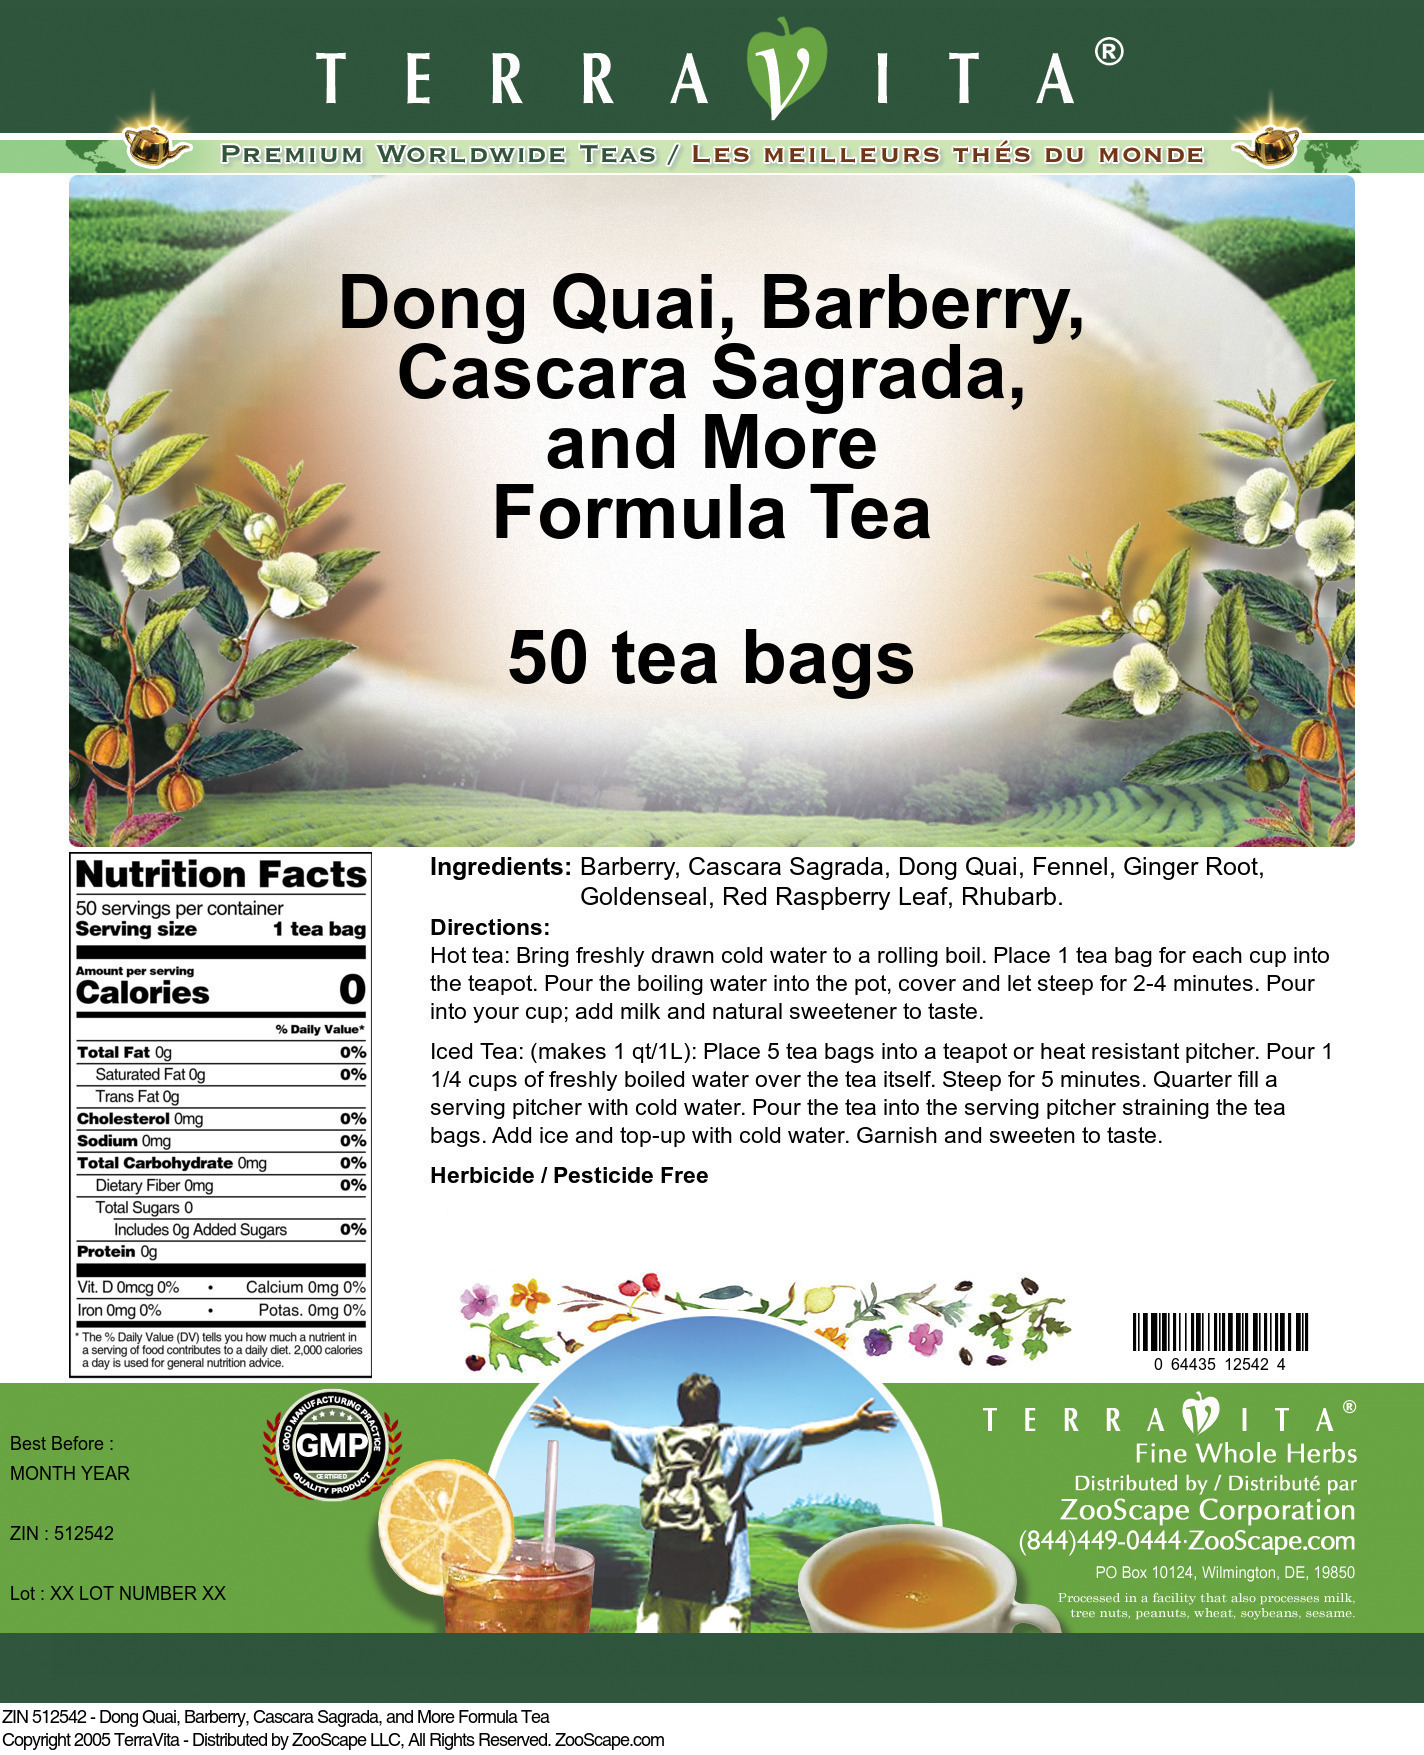 Dong Quai, Barberry, Cascara Sagrada, and More Formula Tea - Label